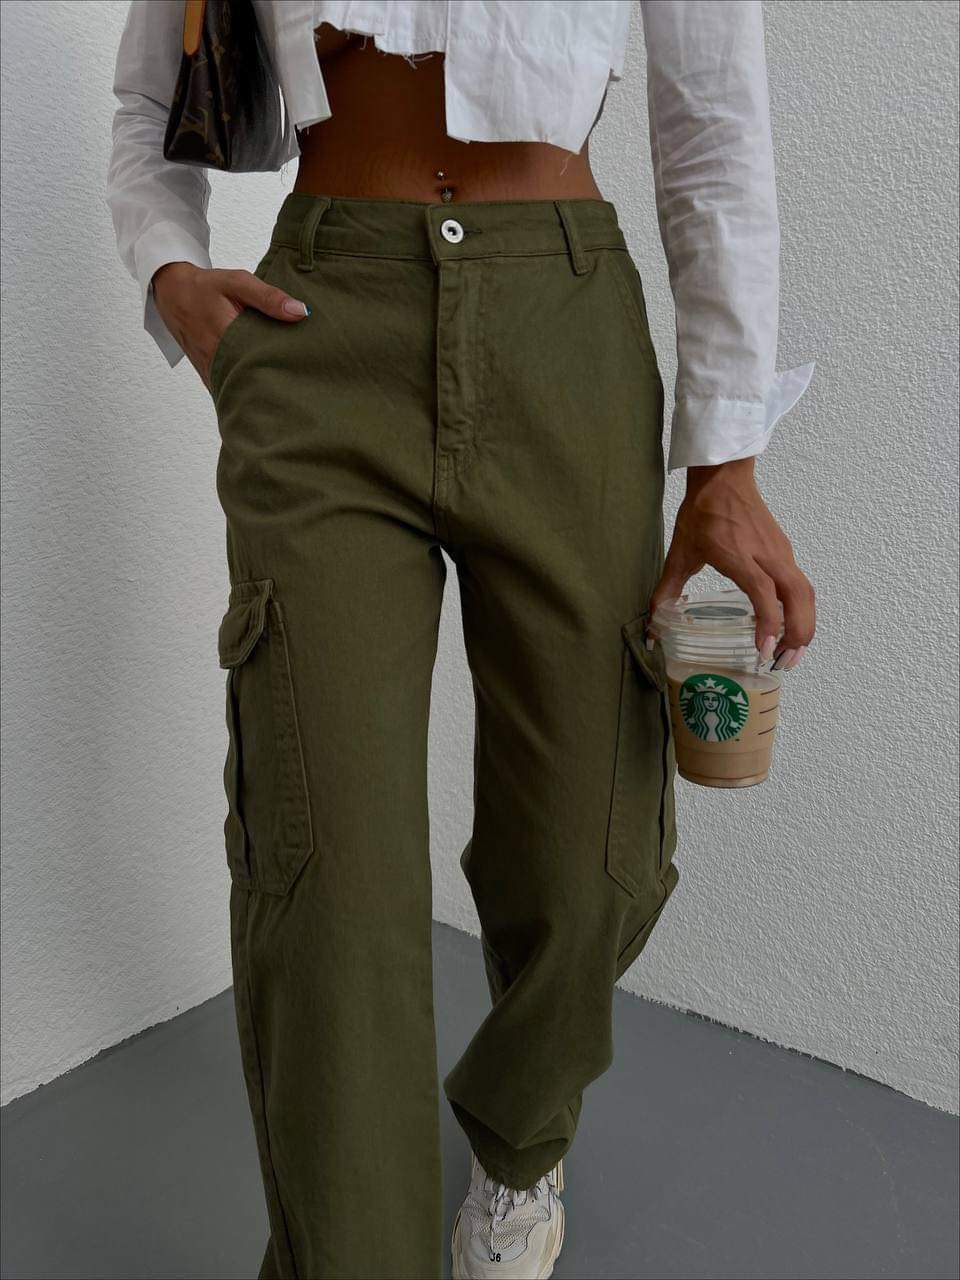 Cargo Pants Women Plus Size Casual Solid Color Comfy Mid Rise